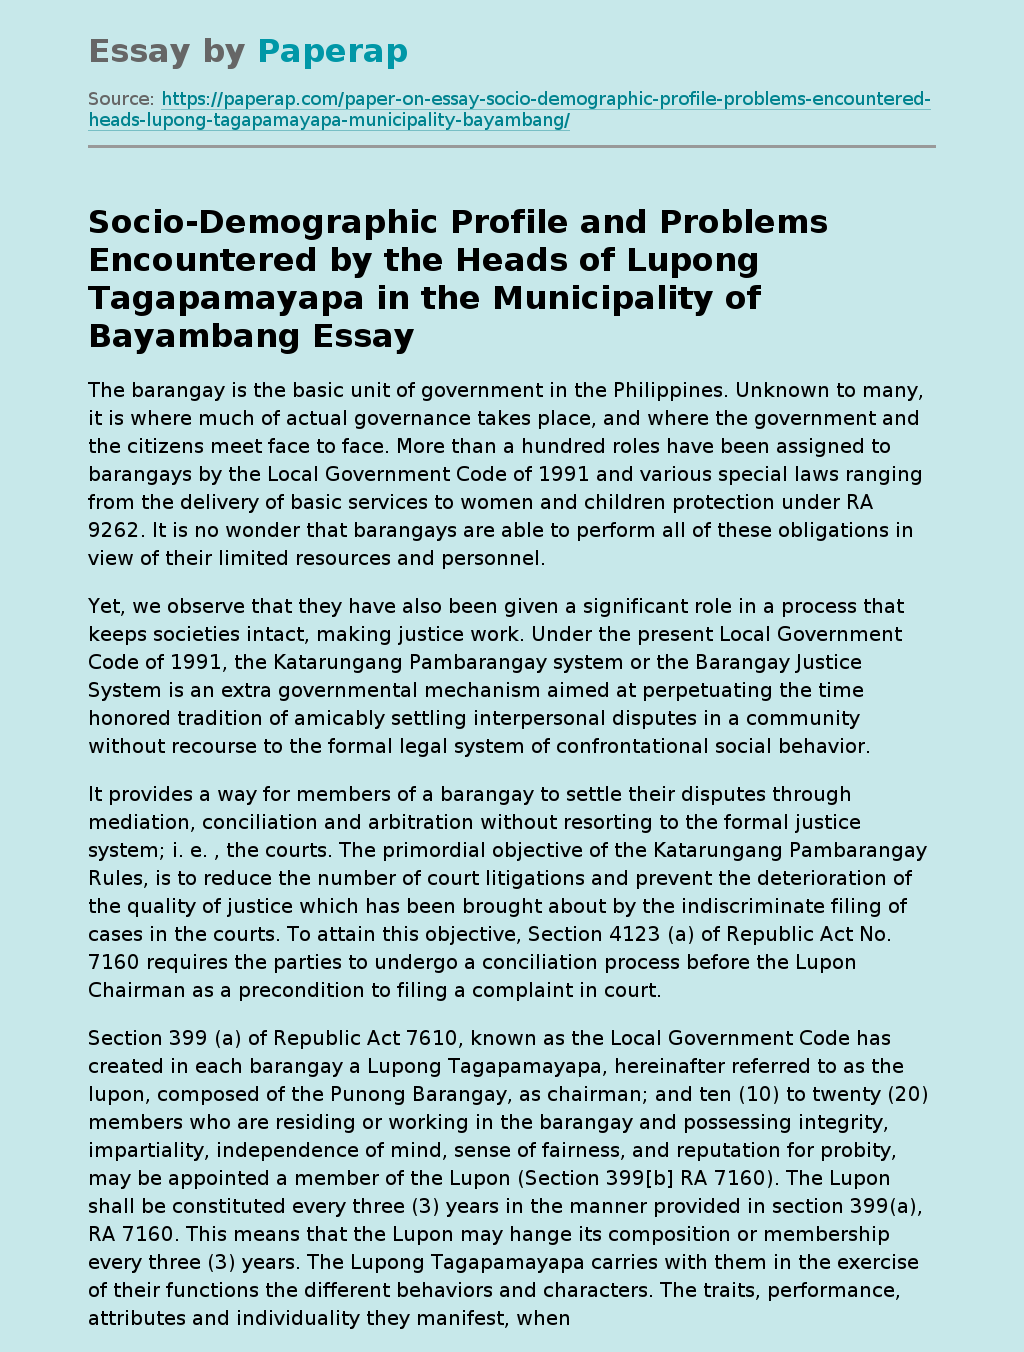 Socio-Demographic Profile and Problems Encountered by the Heads of Lupong Tagapamayapa in the Municipality of Bayambang